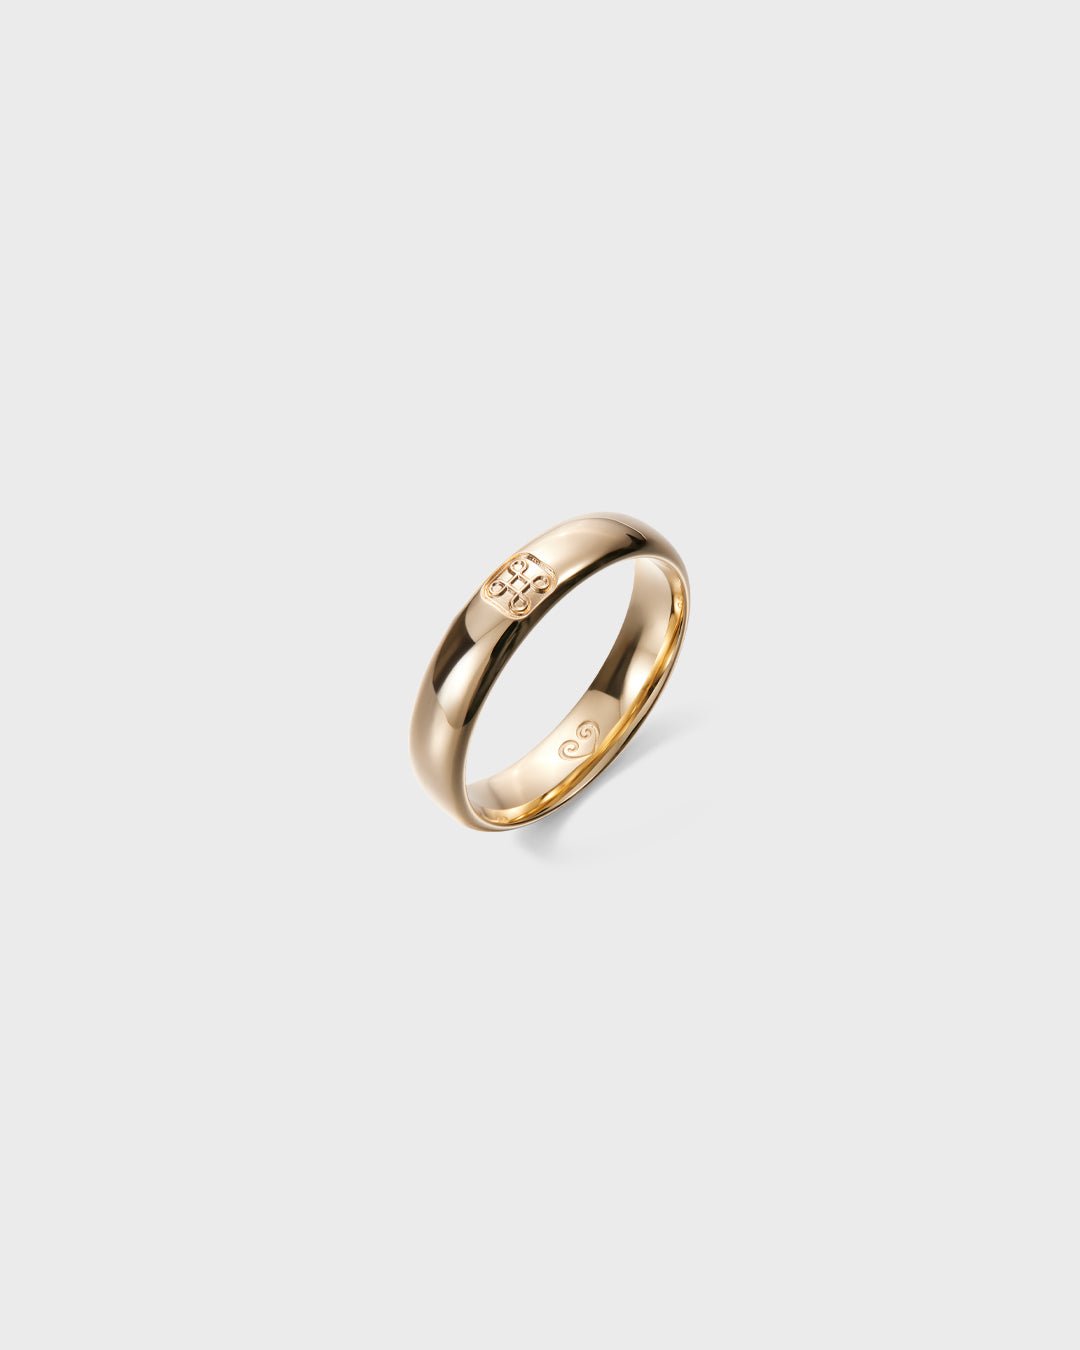 Heraldic Ring gold